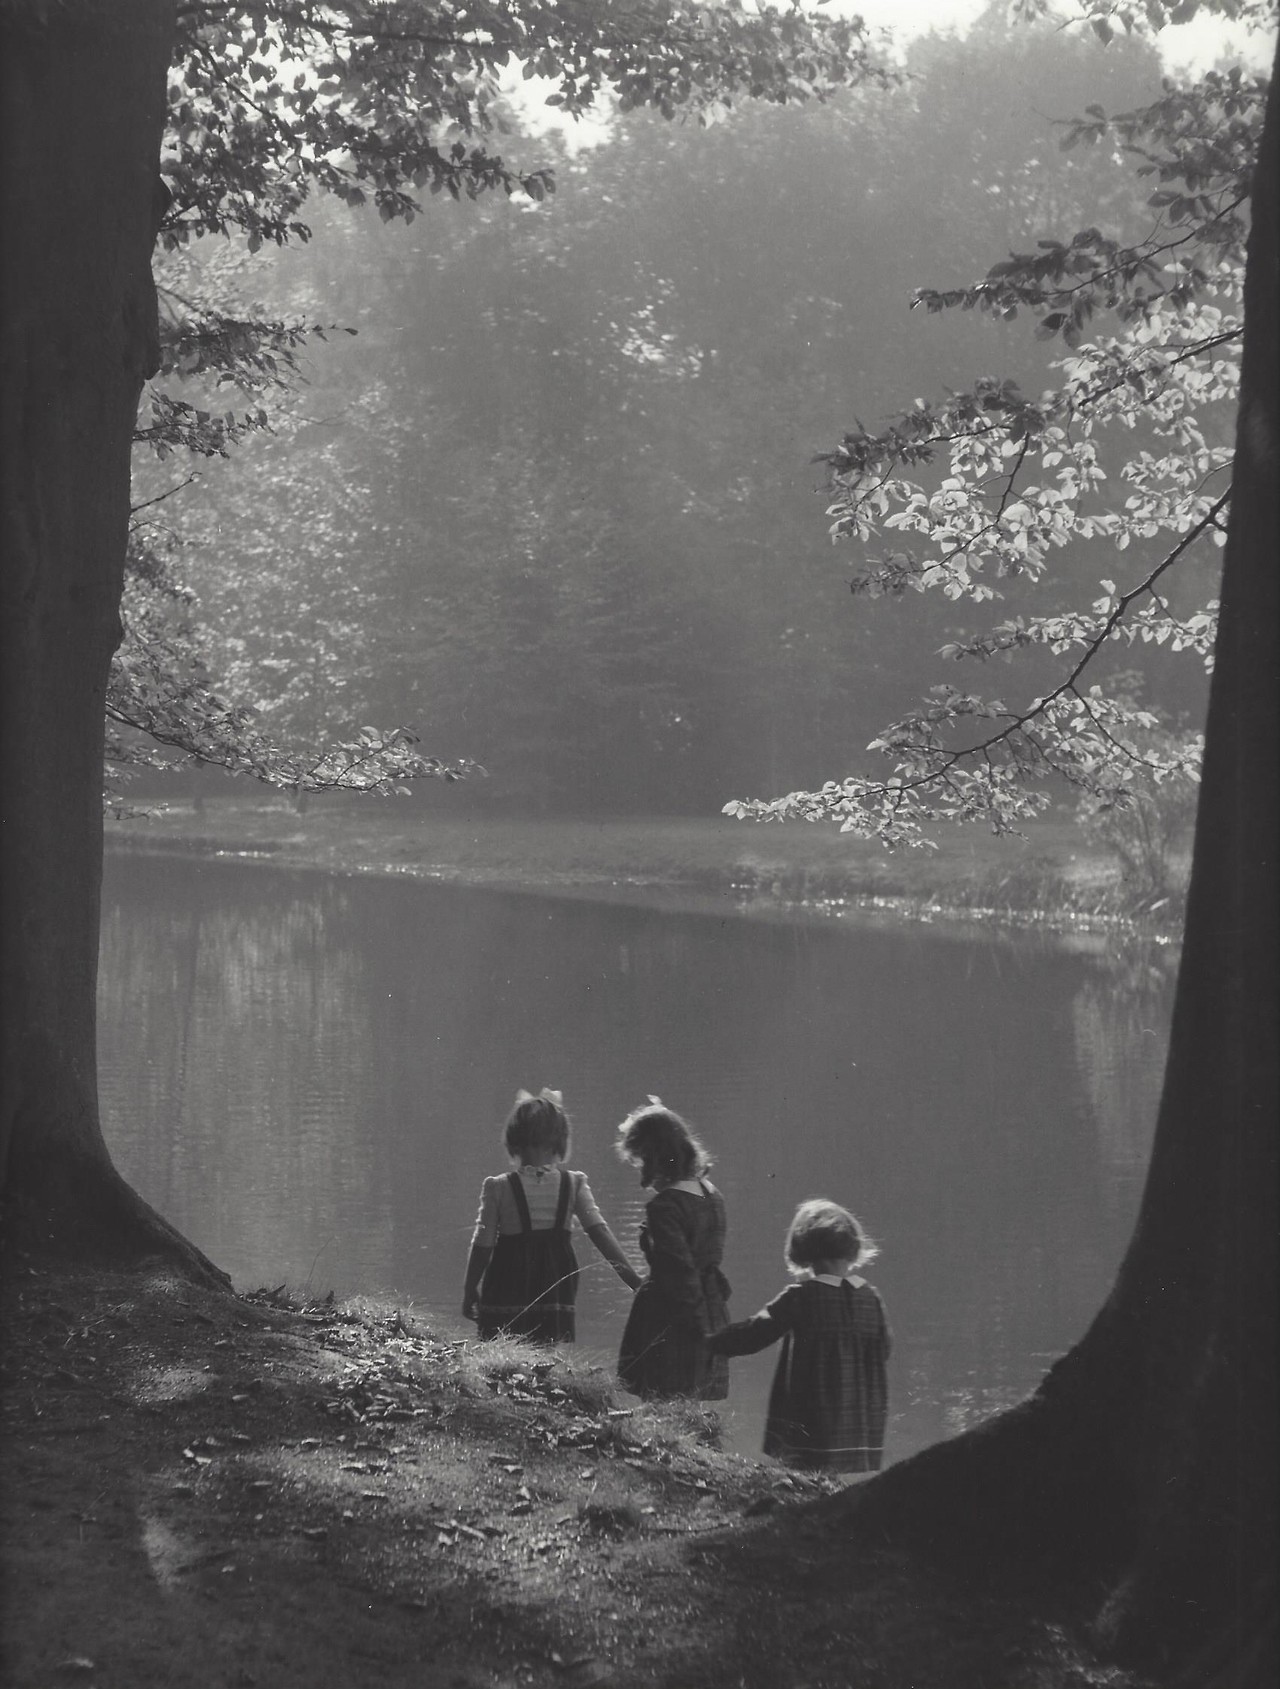 Окрестности Дуурстеде, Нидерланды, 1950-е. Фотограф Кис Шерер